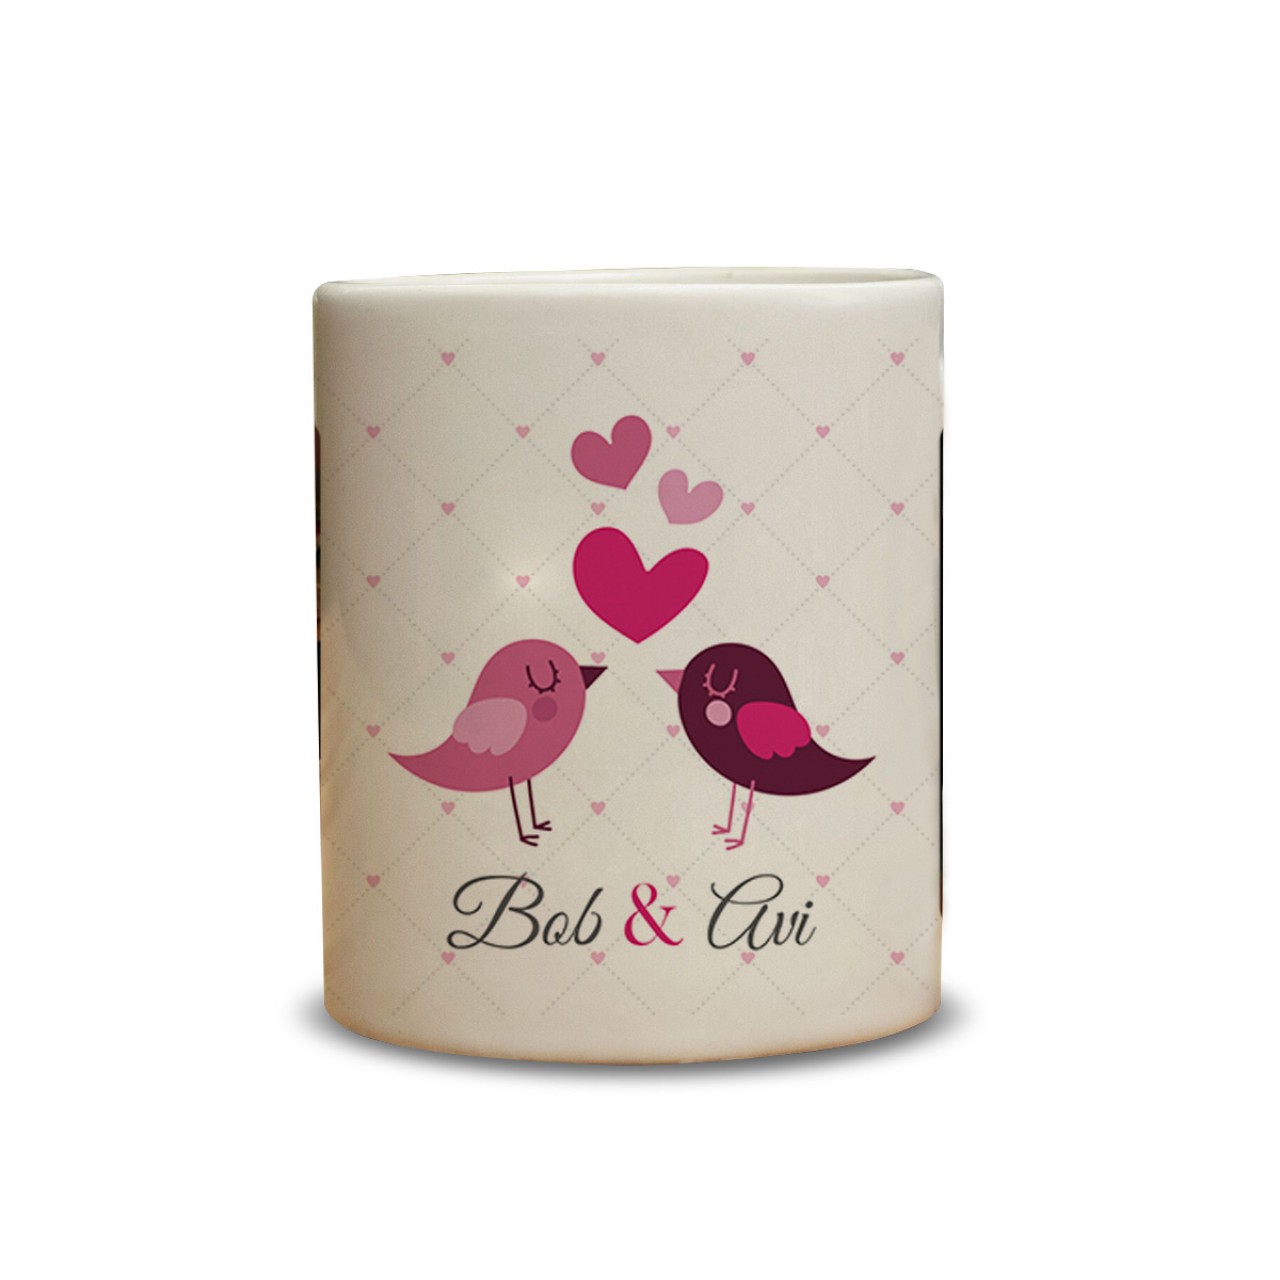 Love birds mug